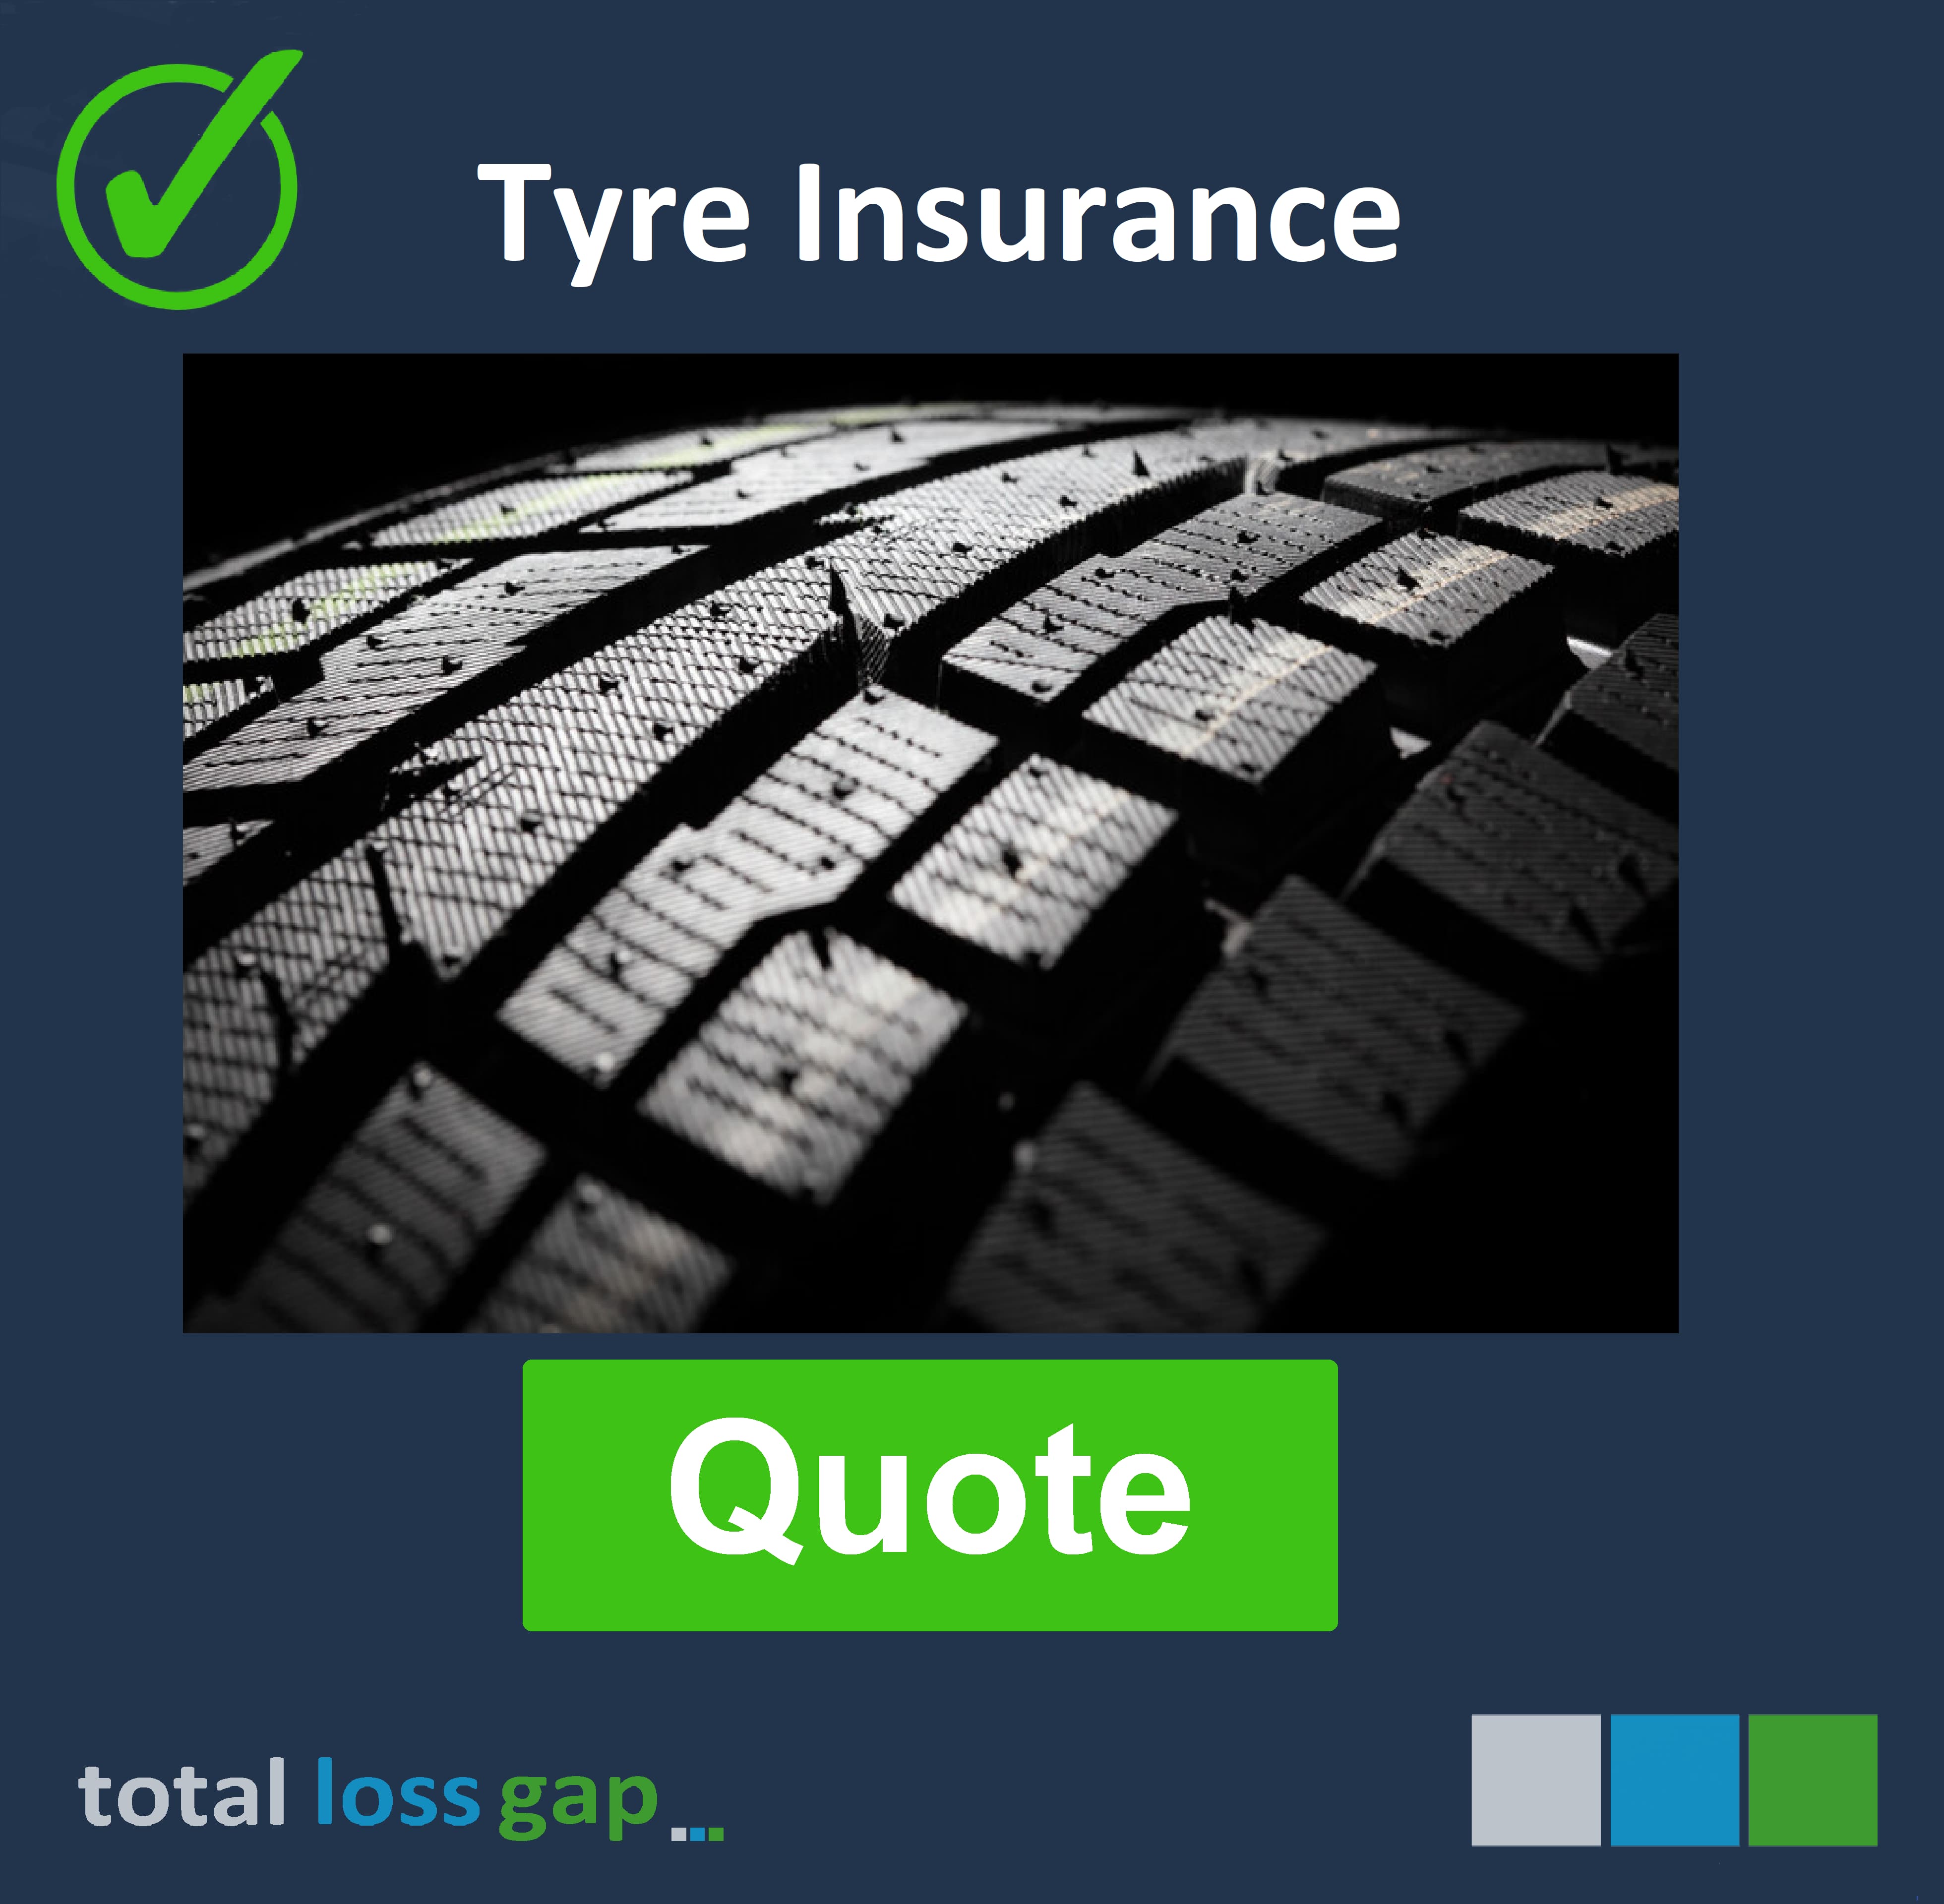 Tyre insurance